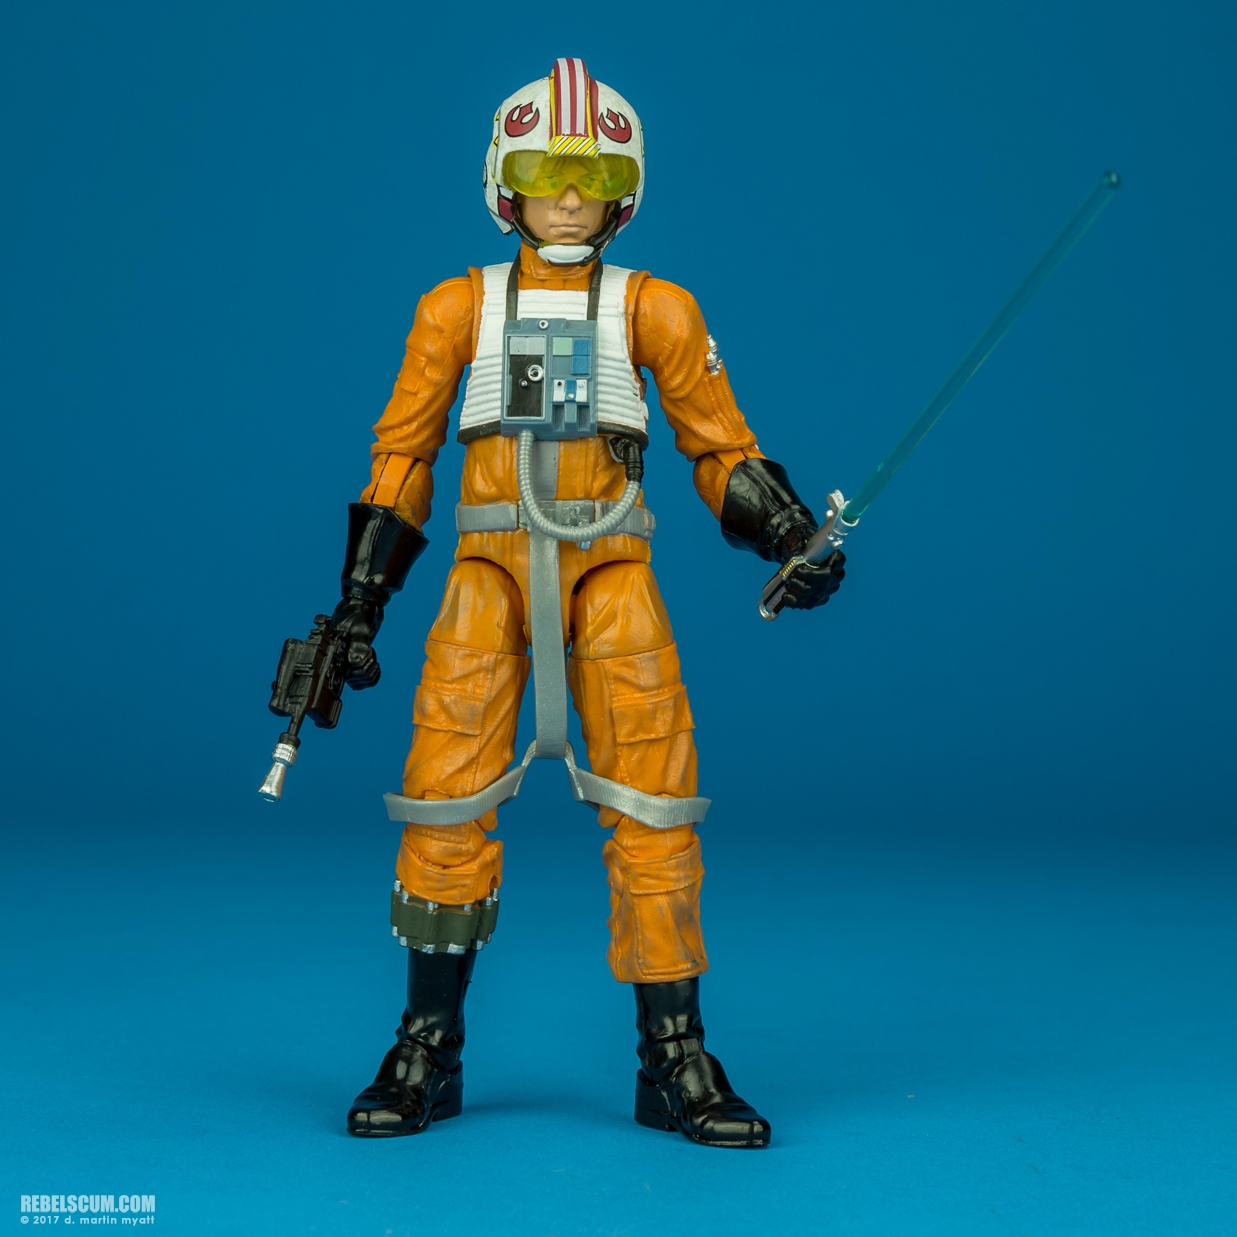 Luke-Skywalker-X-Wing-Pilot-40th-Anniversary-6-inch-013.jpg